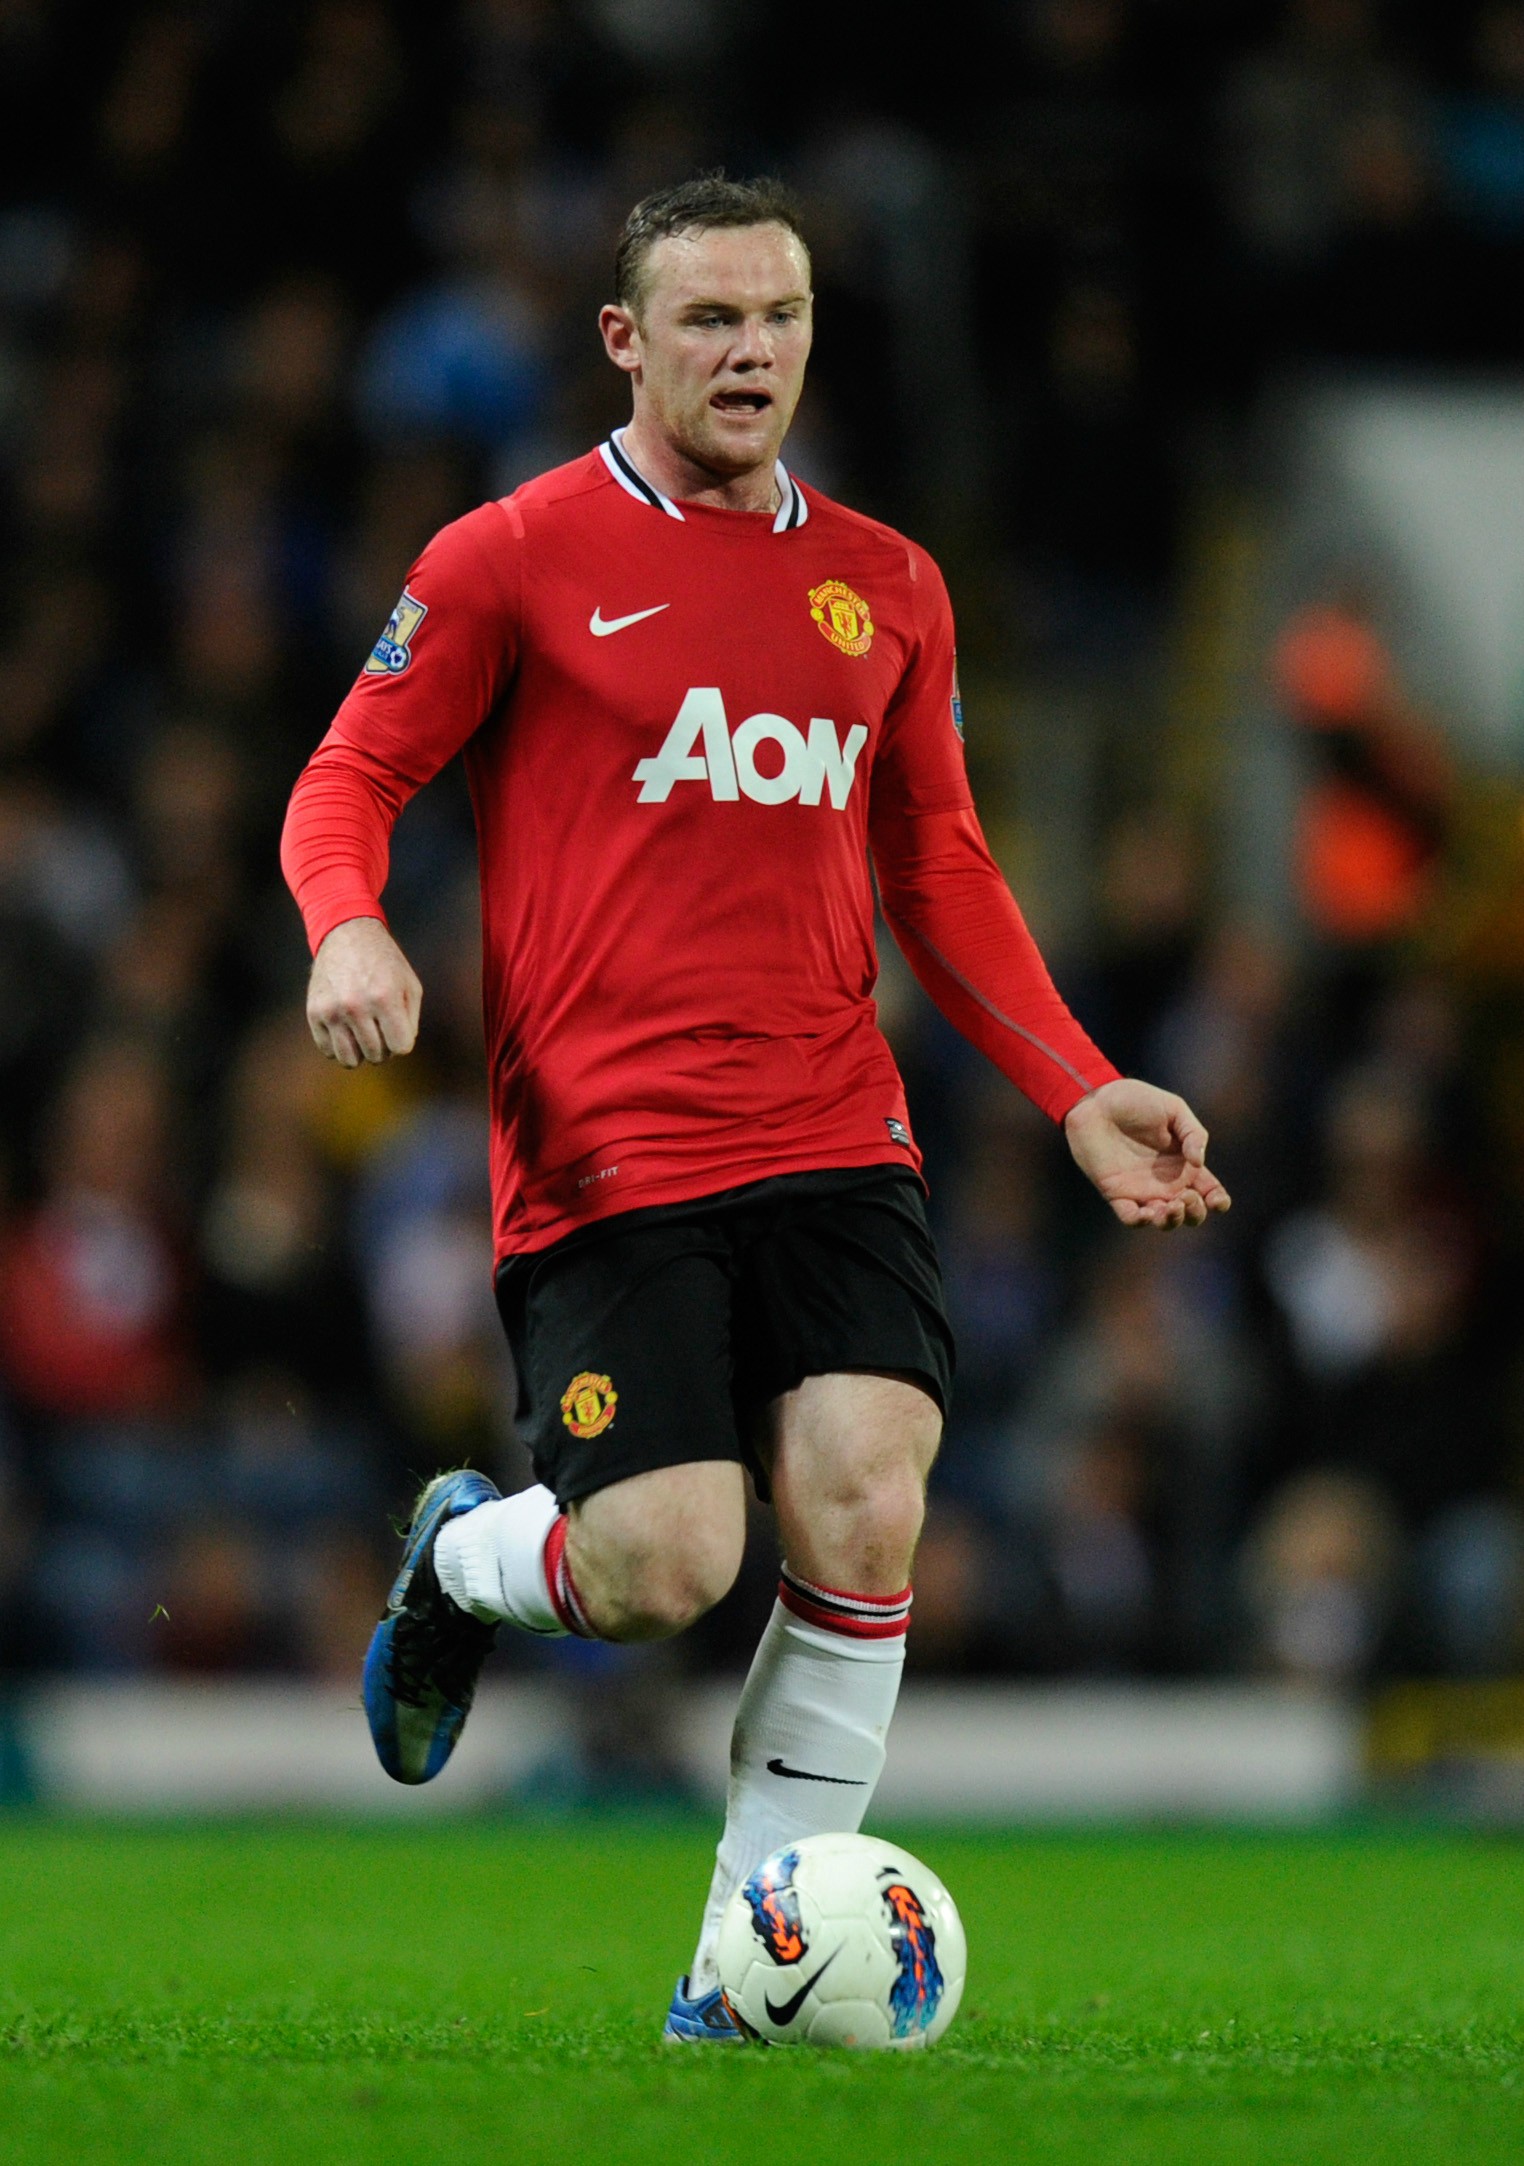 Wayne Rooney photo gallery - 61 high quality pics of Wayne Rooney